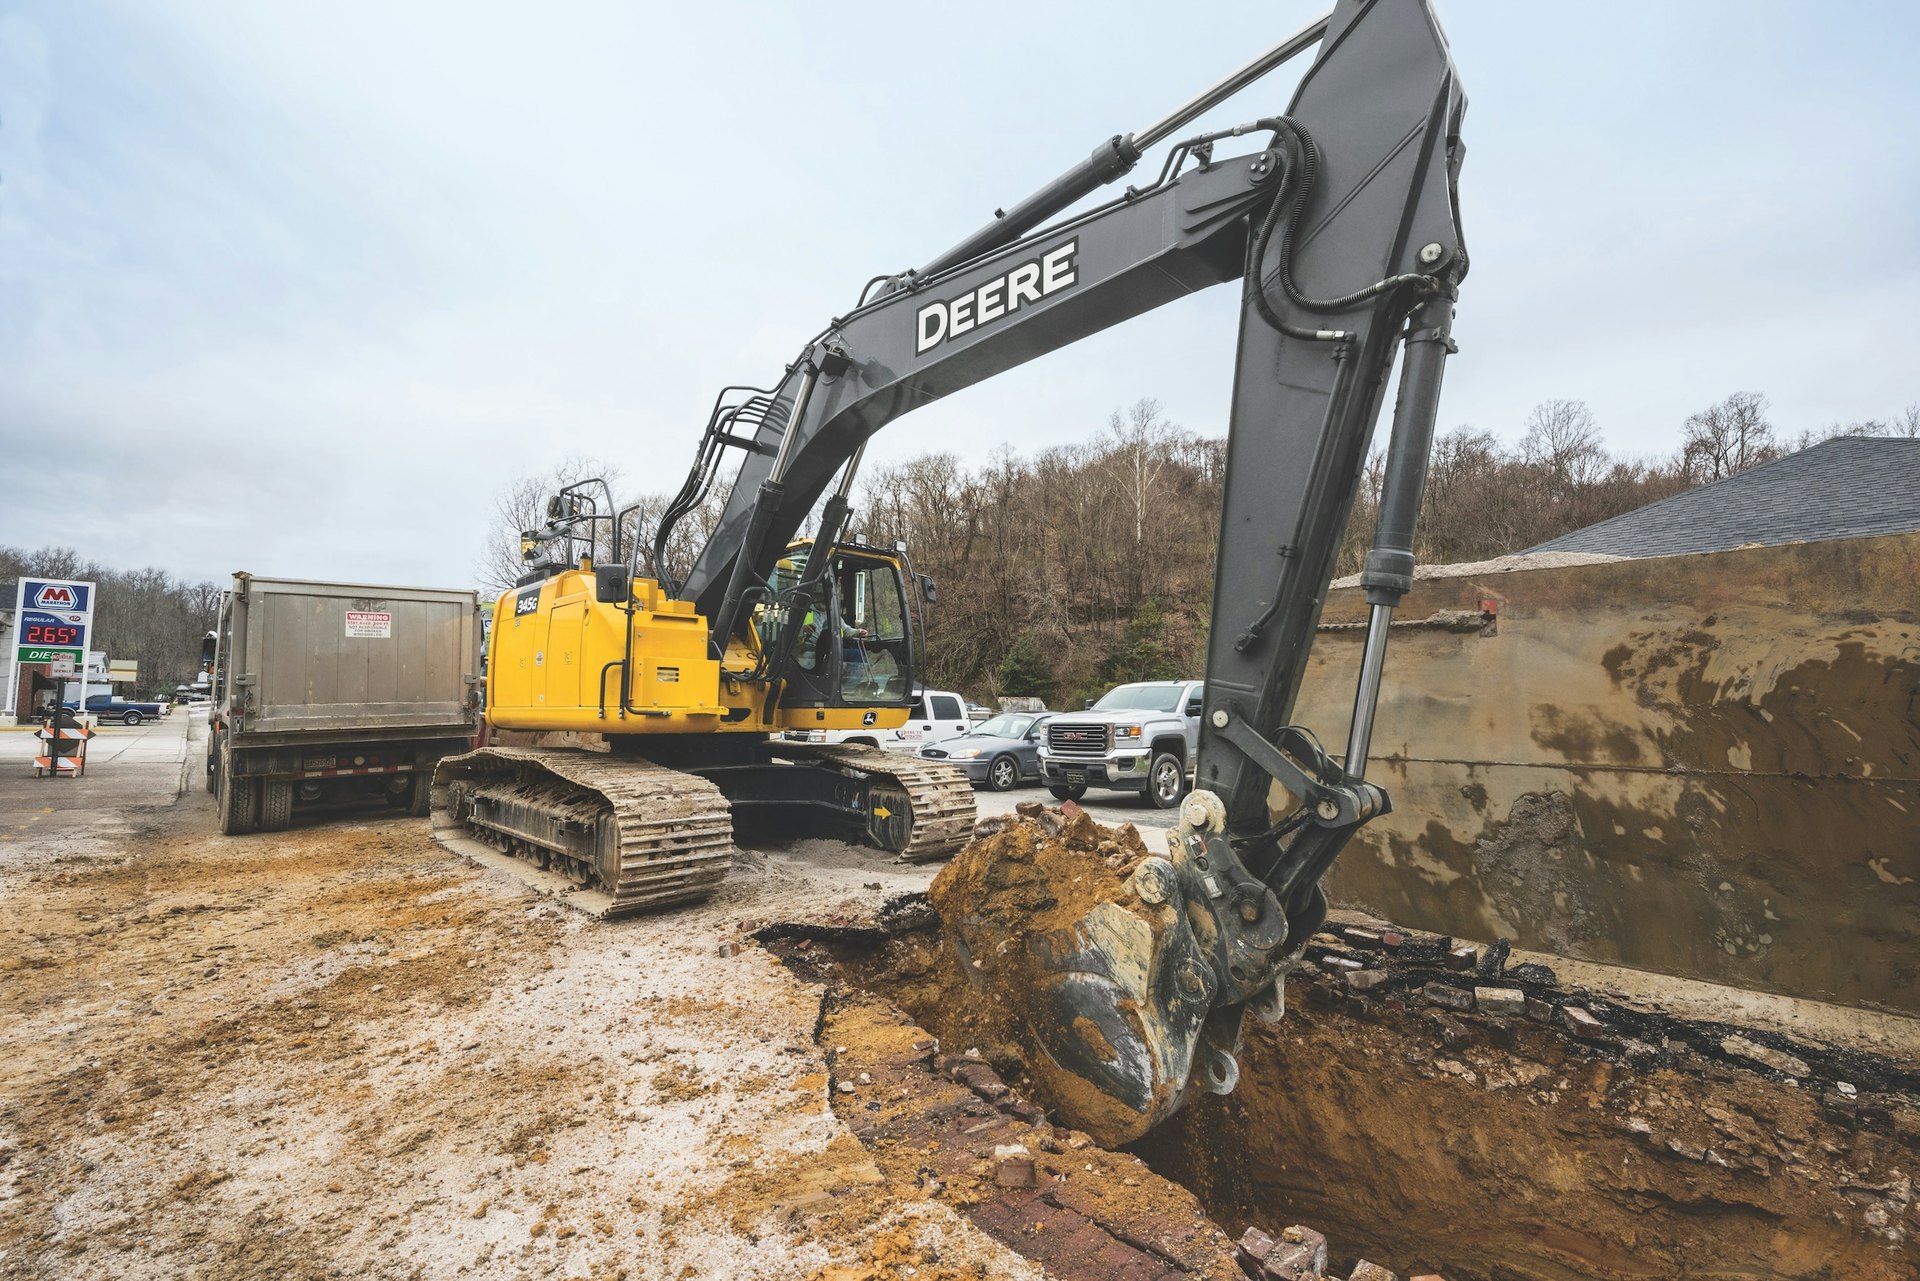 John Deere Debuts New Planting Technology & Electric Excavator